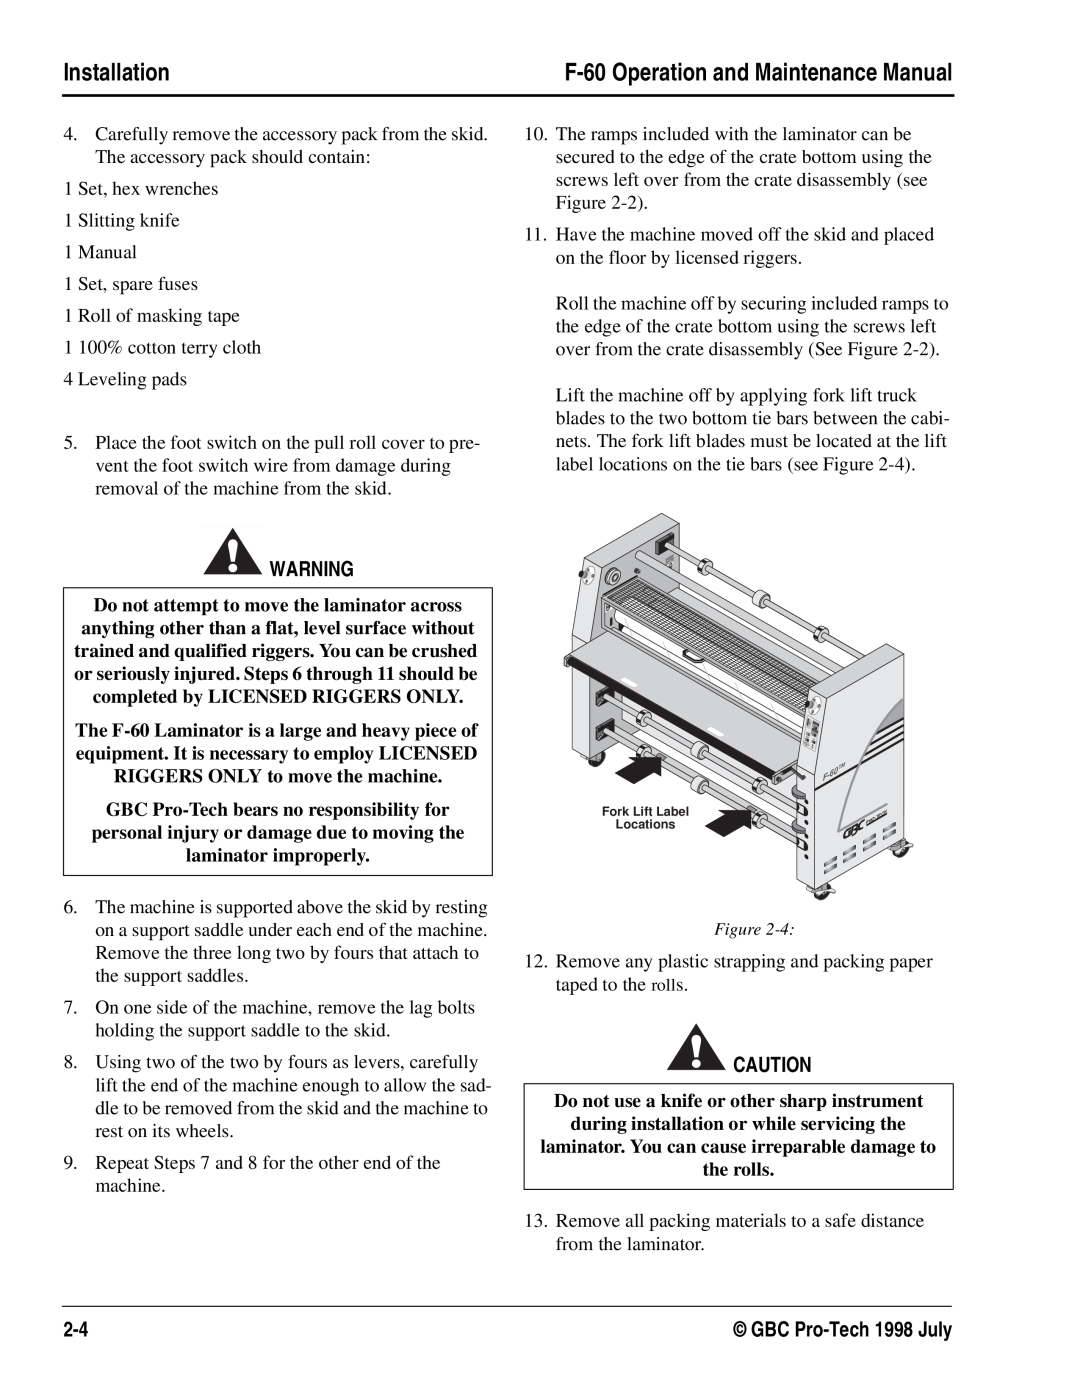 GBC Laminator manual Installation, F-60 Operation and Maintenance Manual 